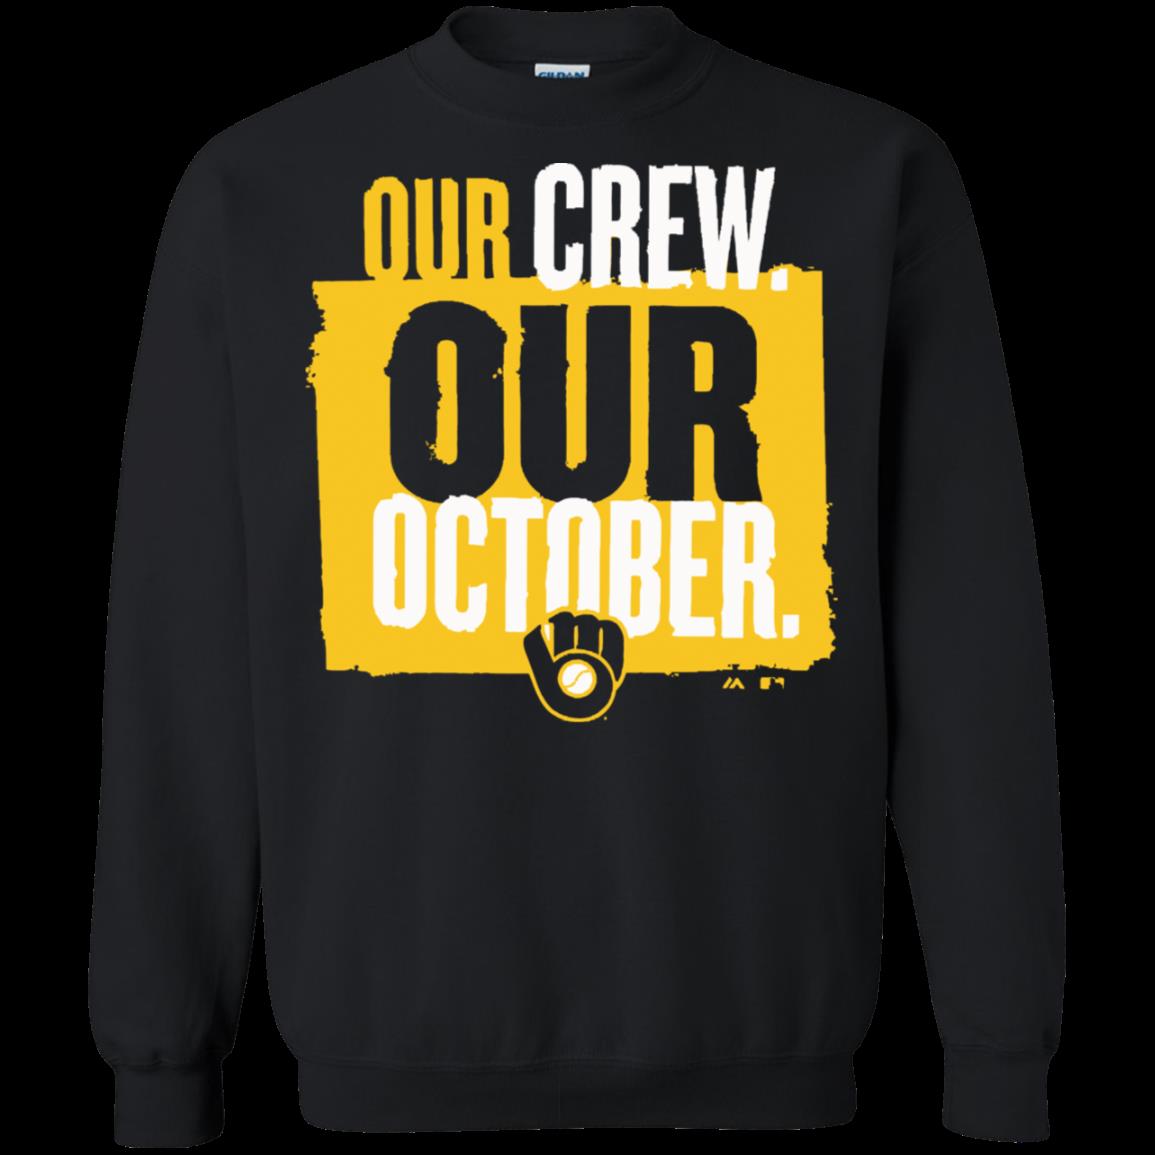 brewers youth sweatshirt